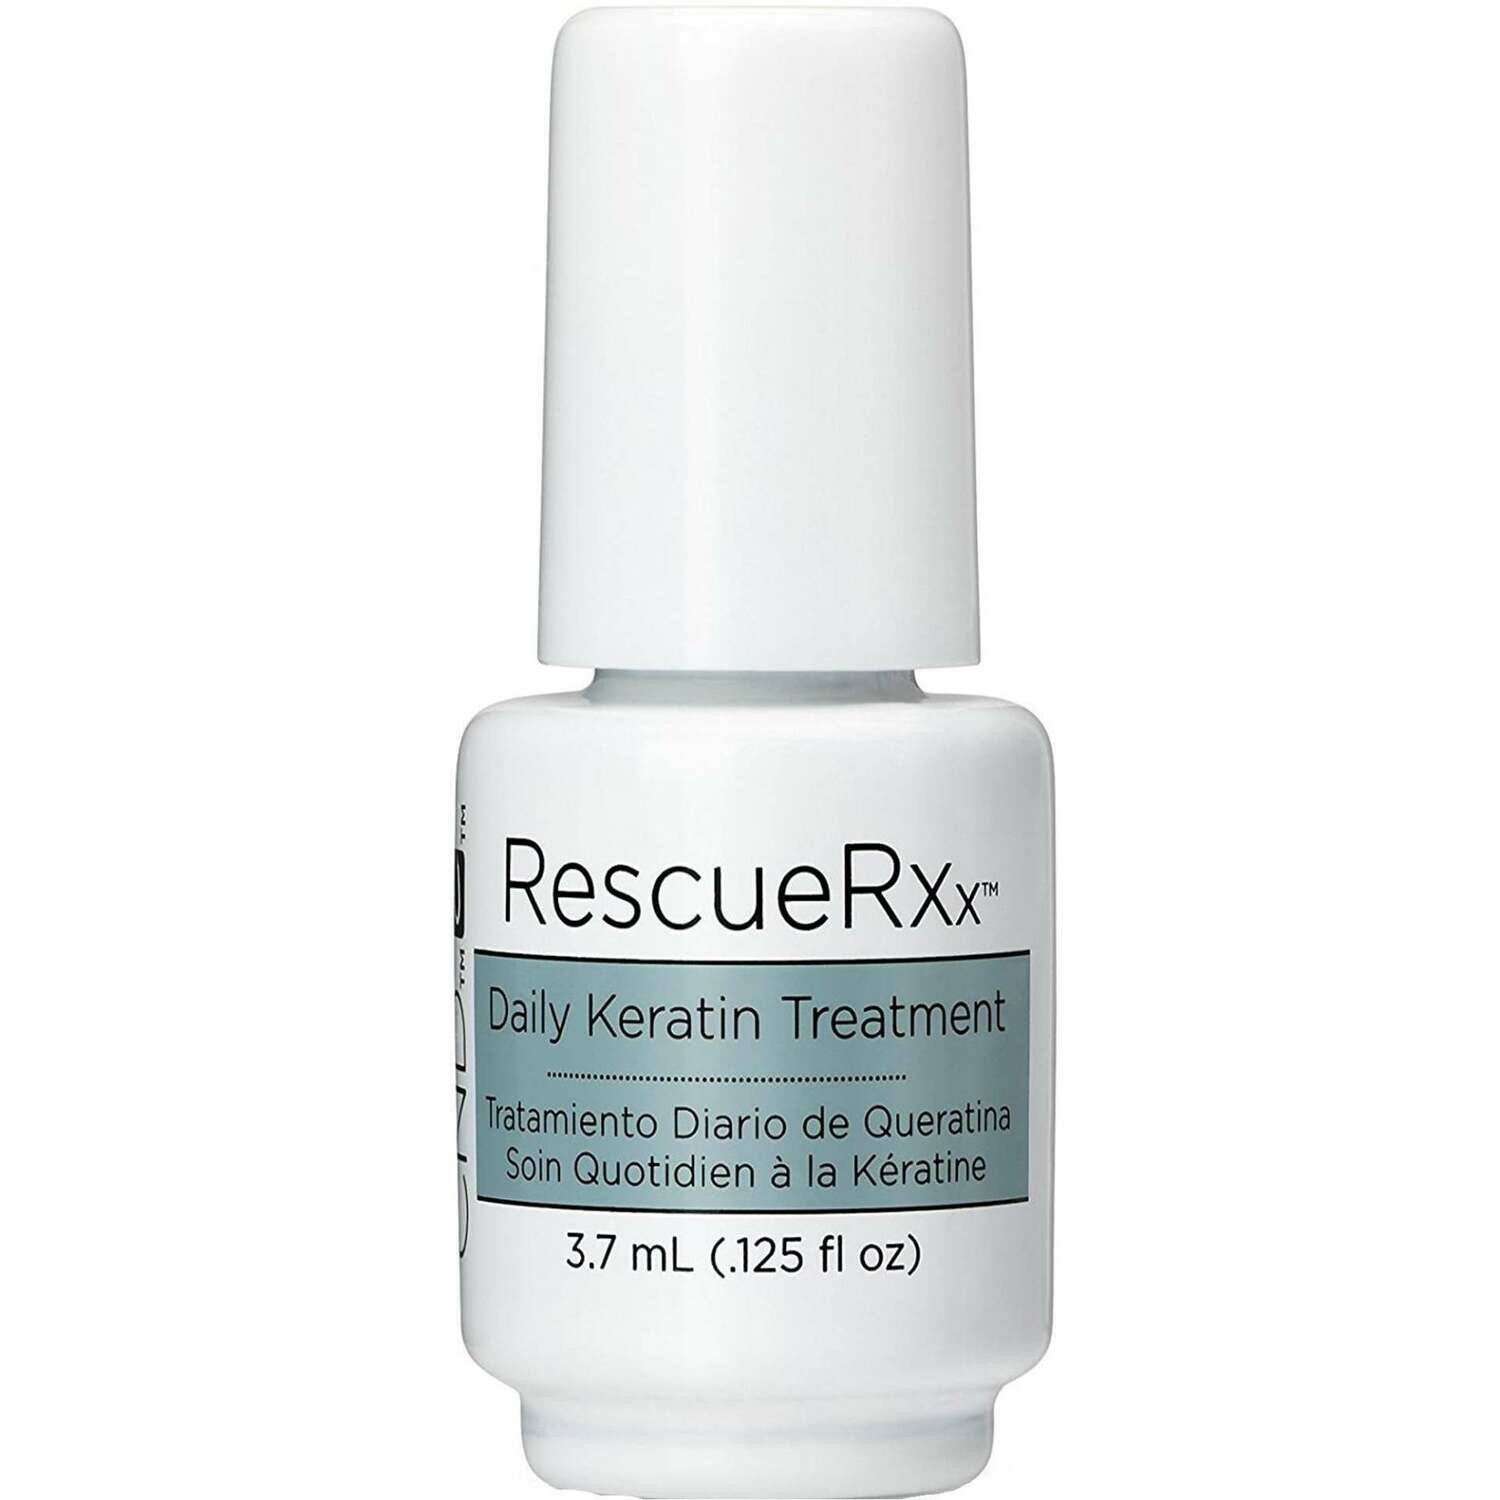 CND Rescue RX Keratin Treatment